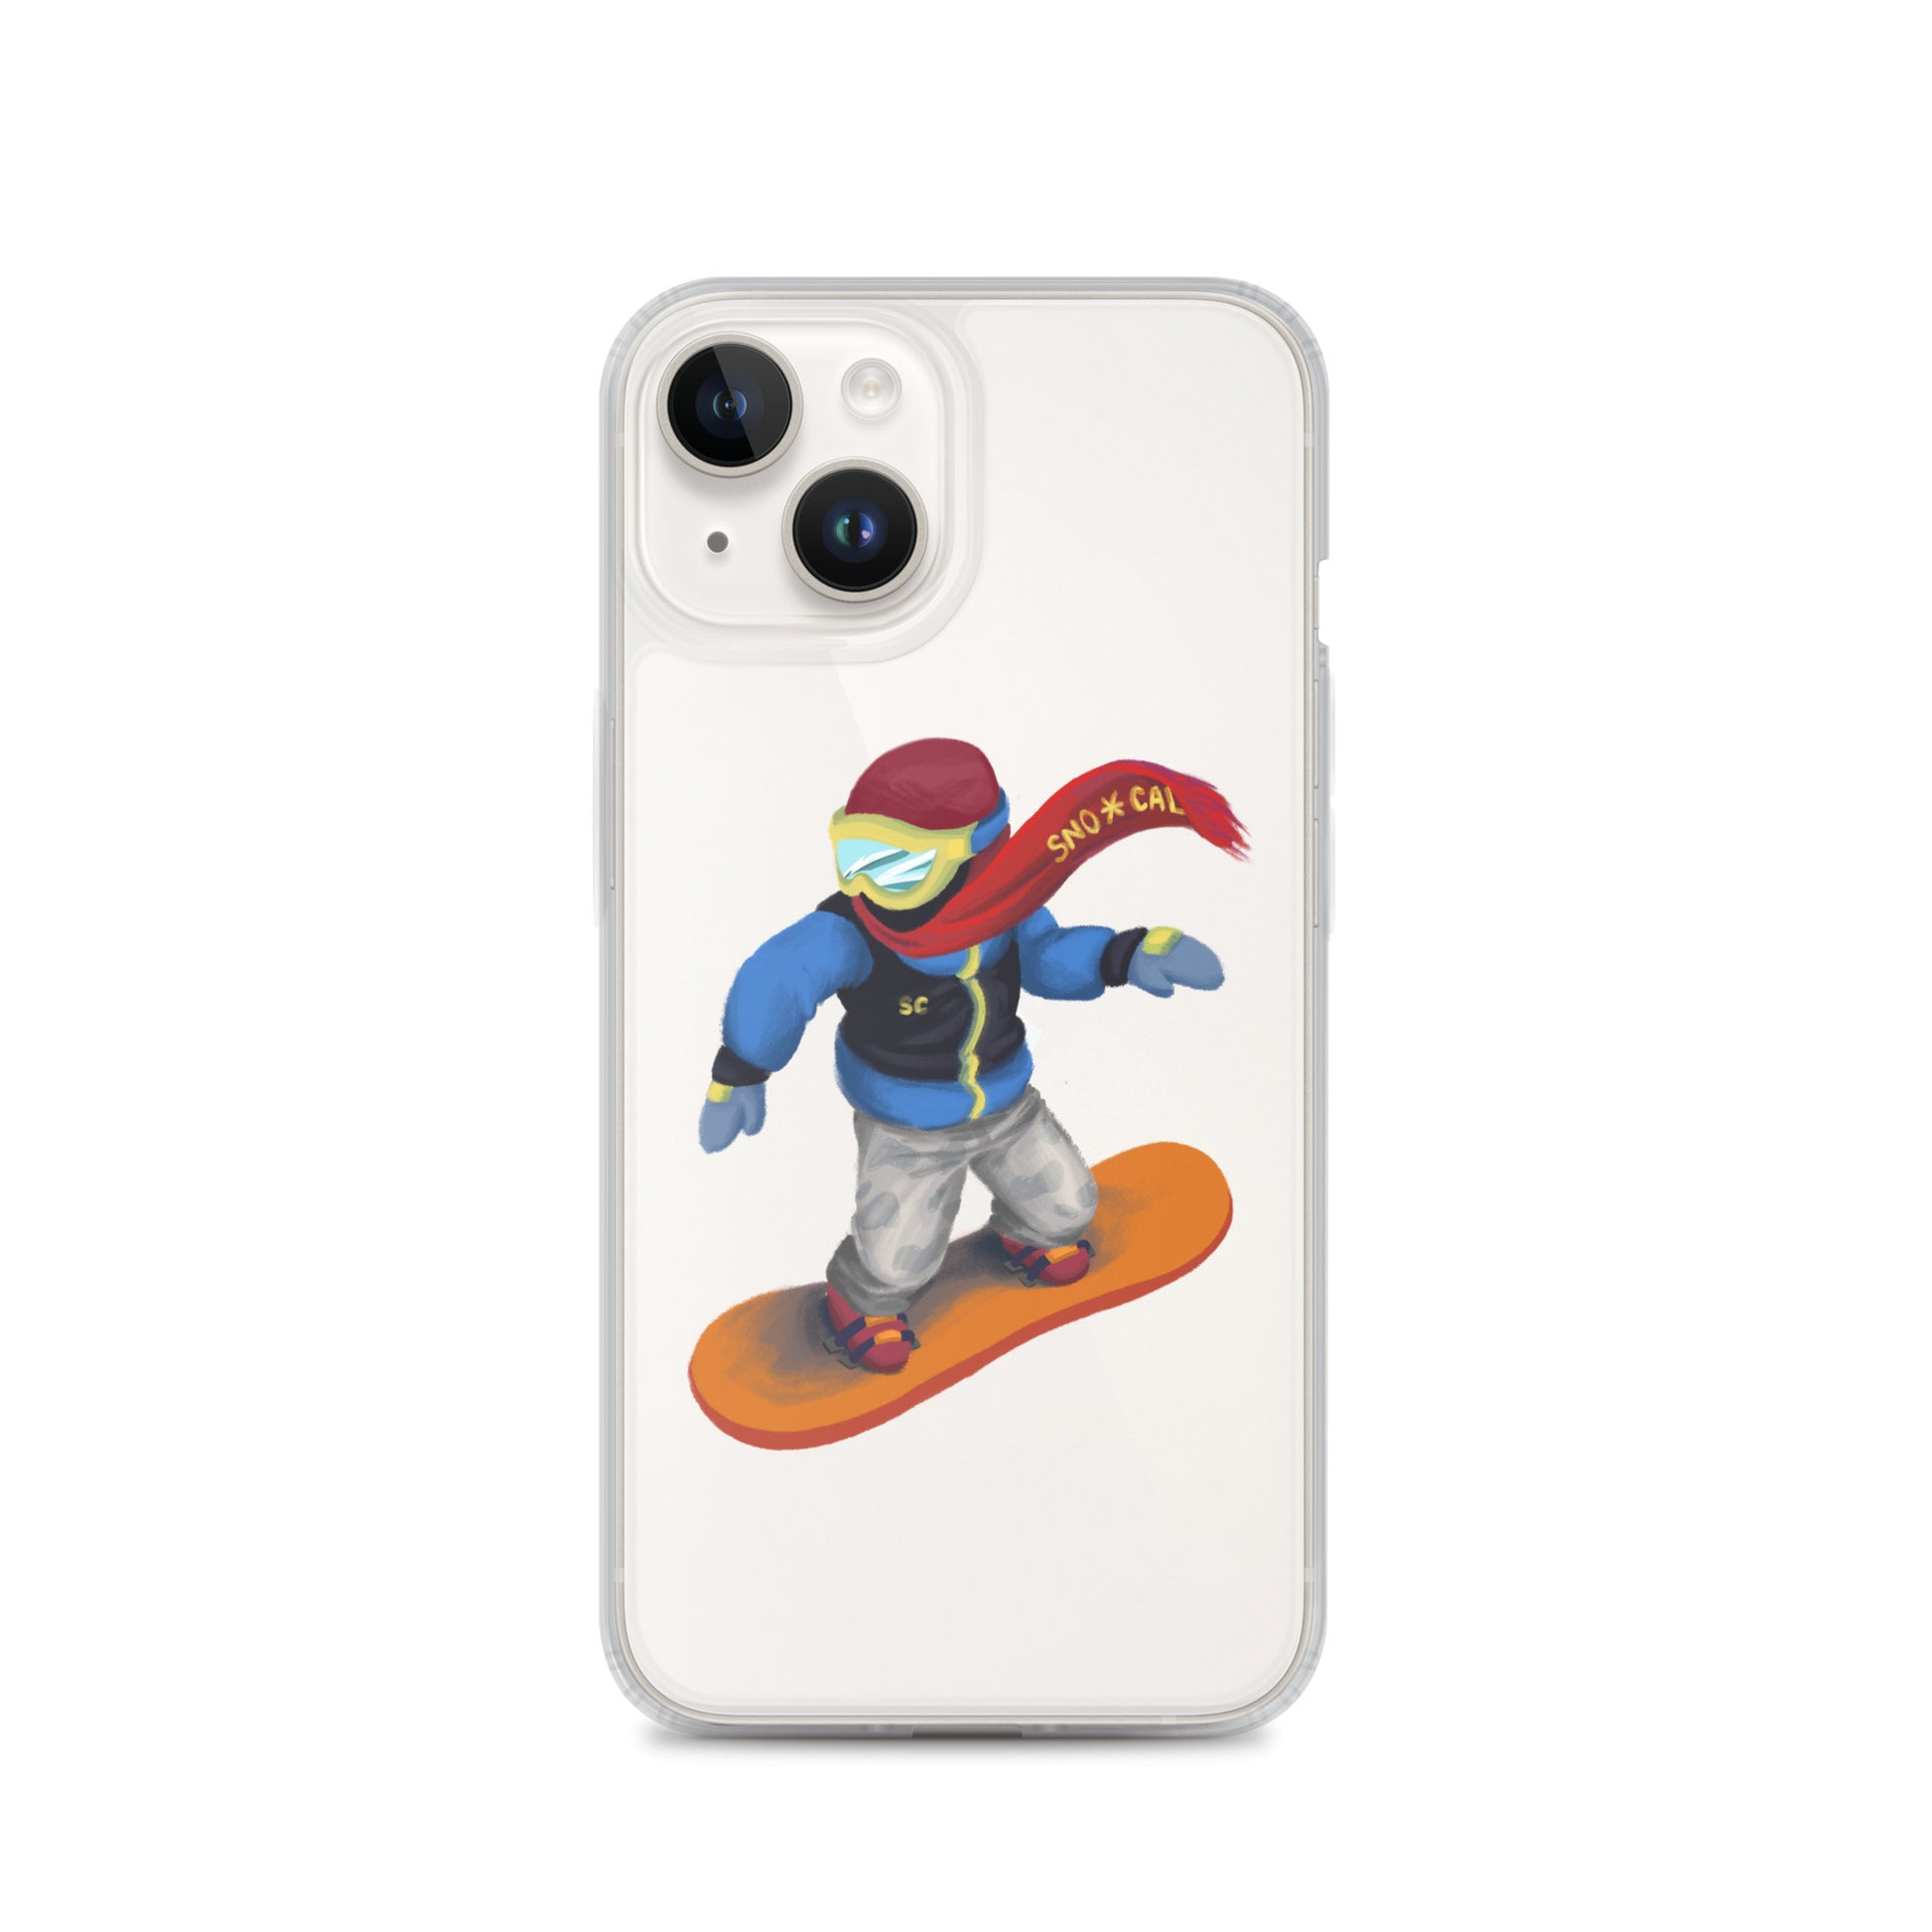 snowboarding emoji phone case